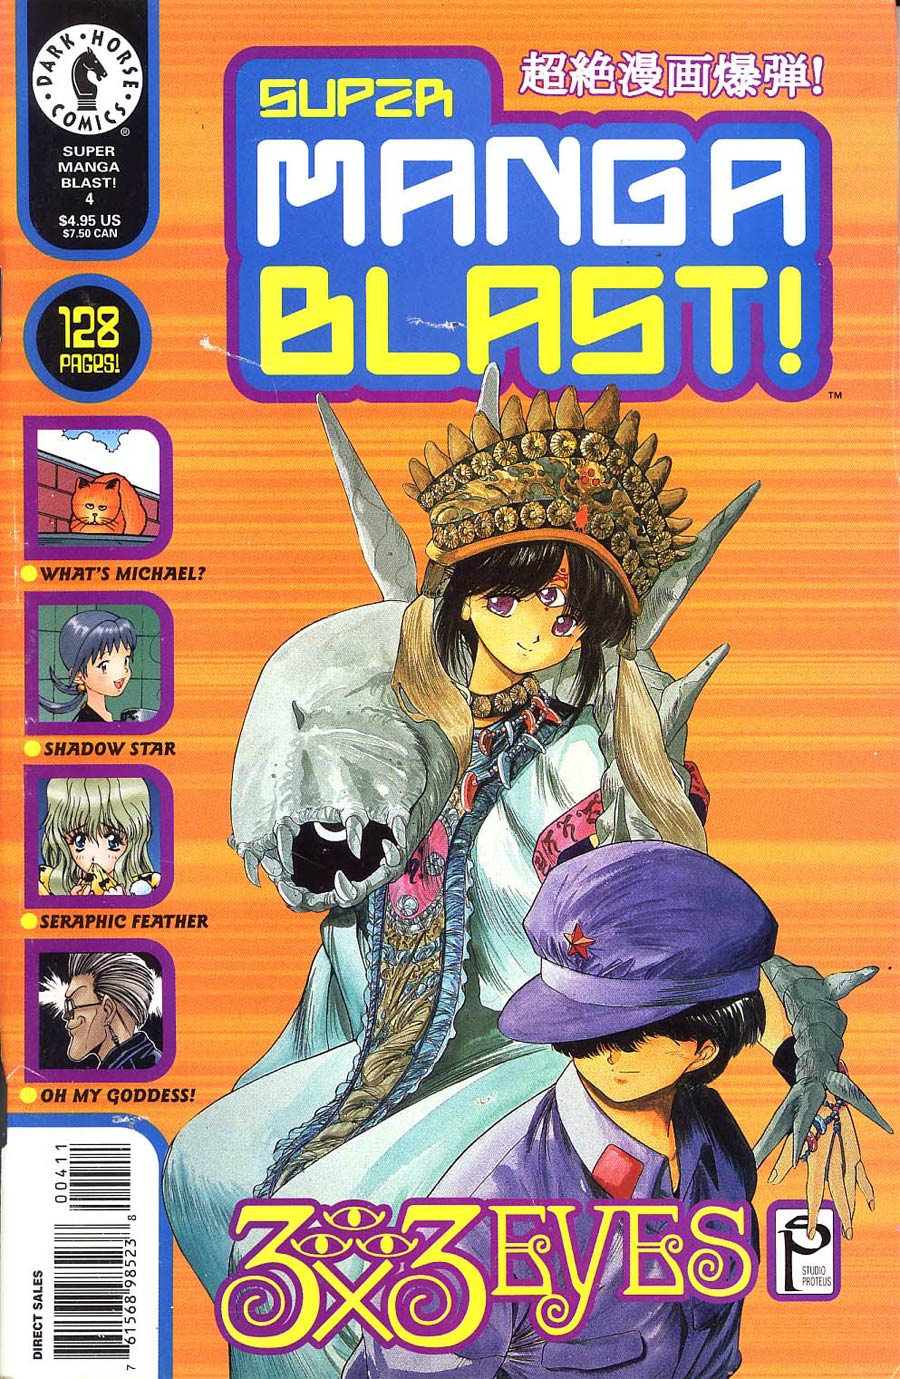 Super Manga Blast #4